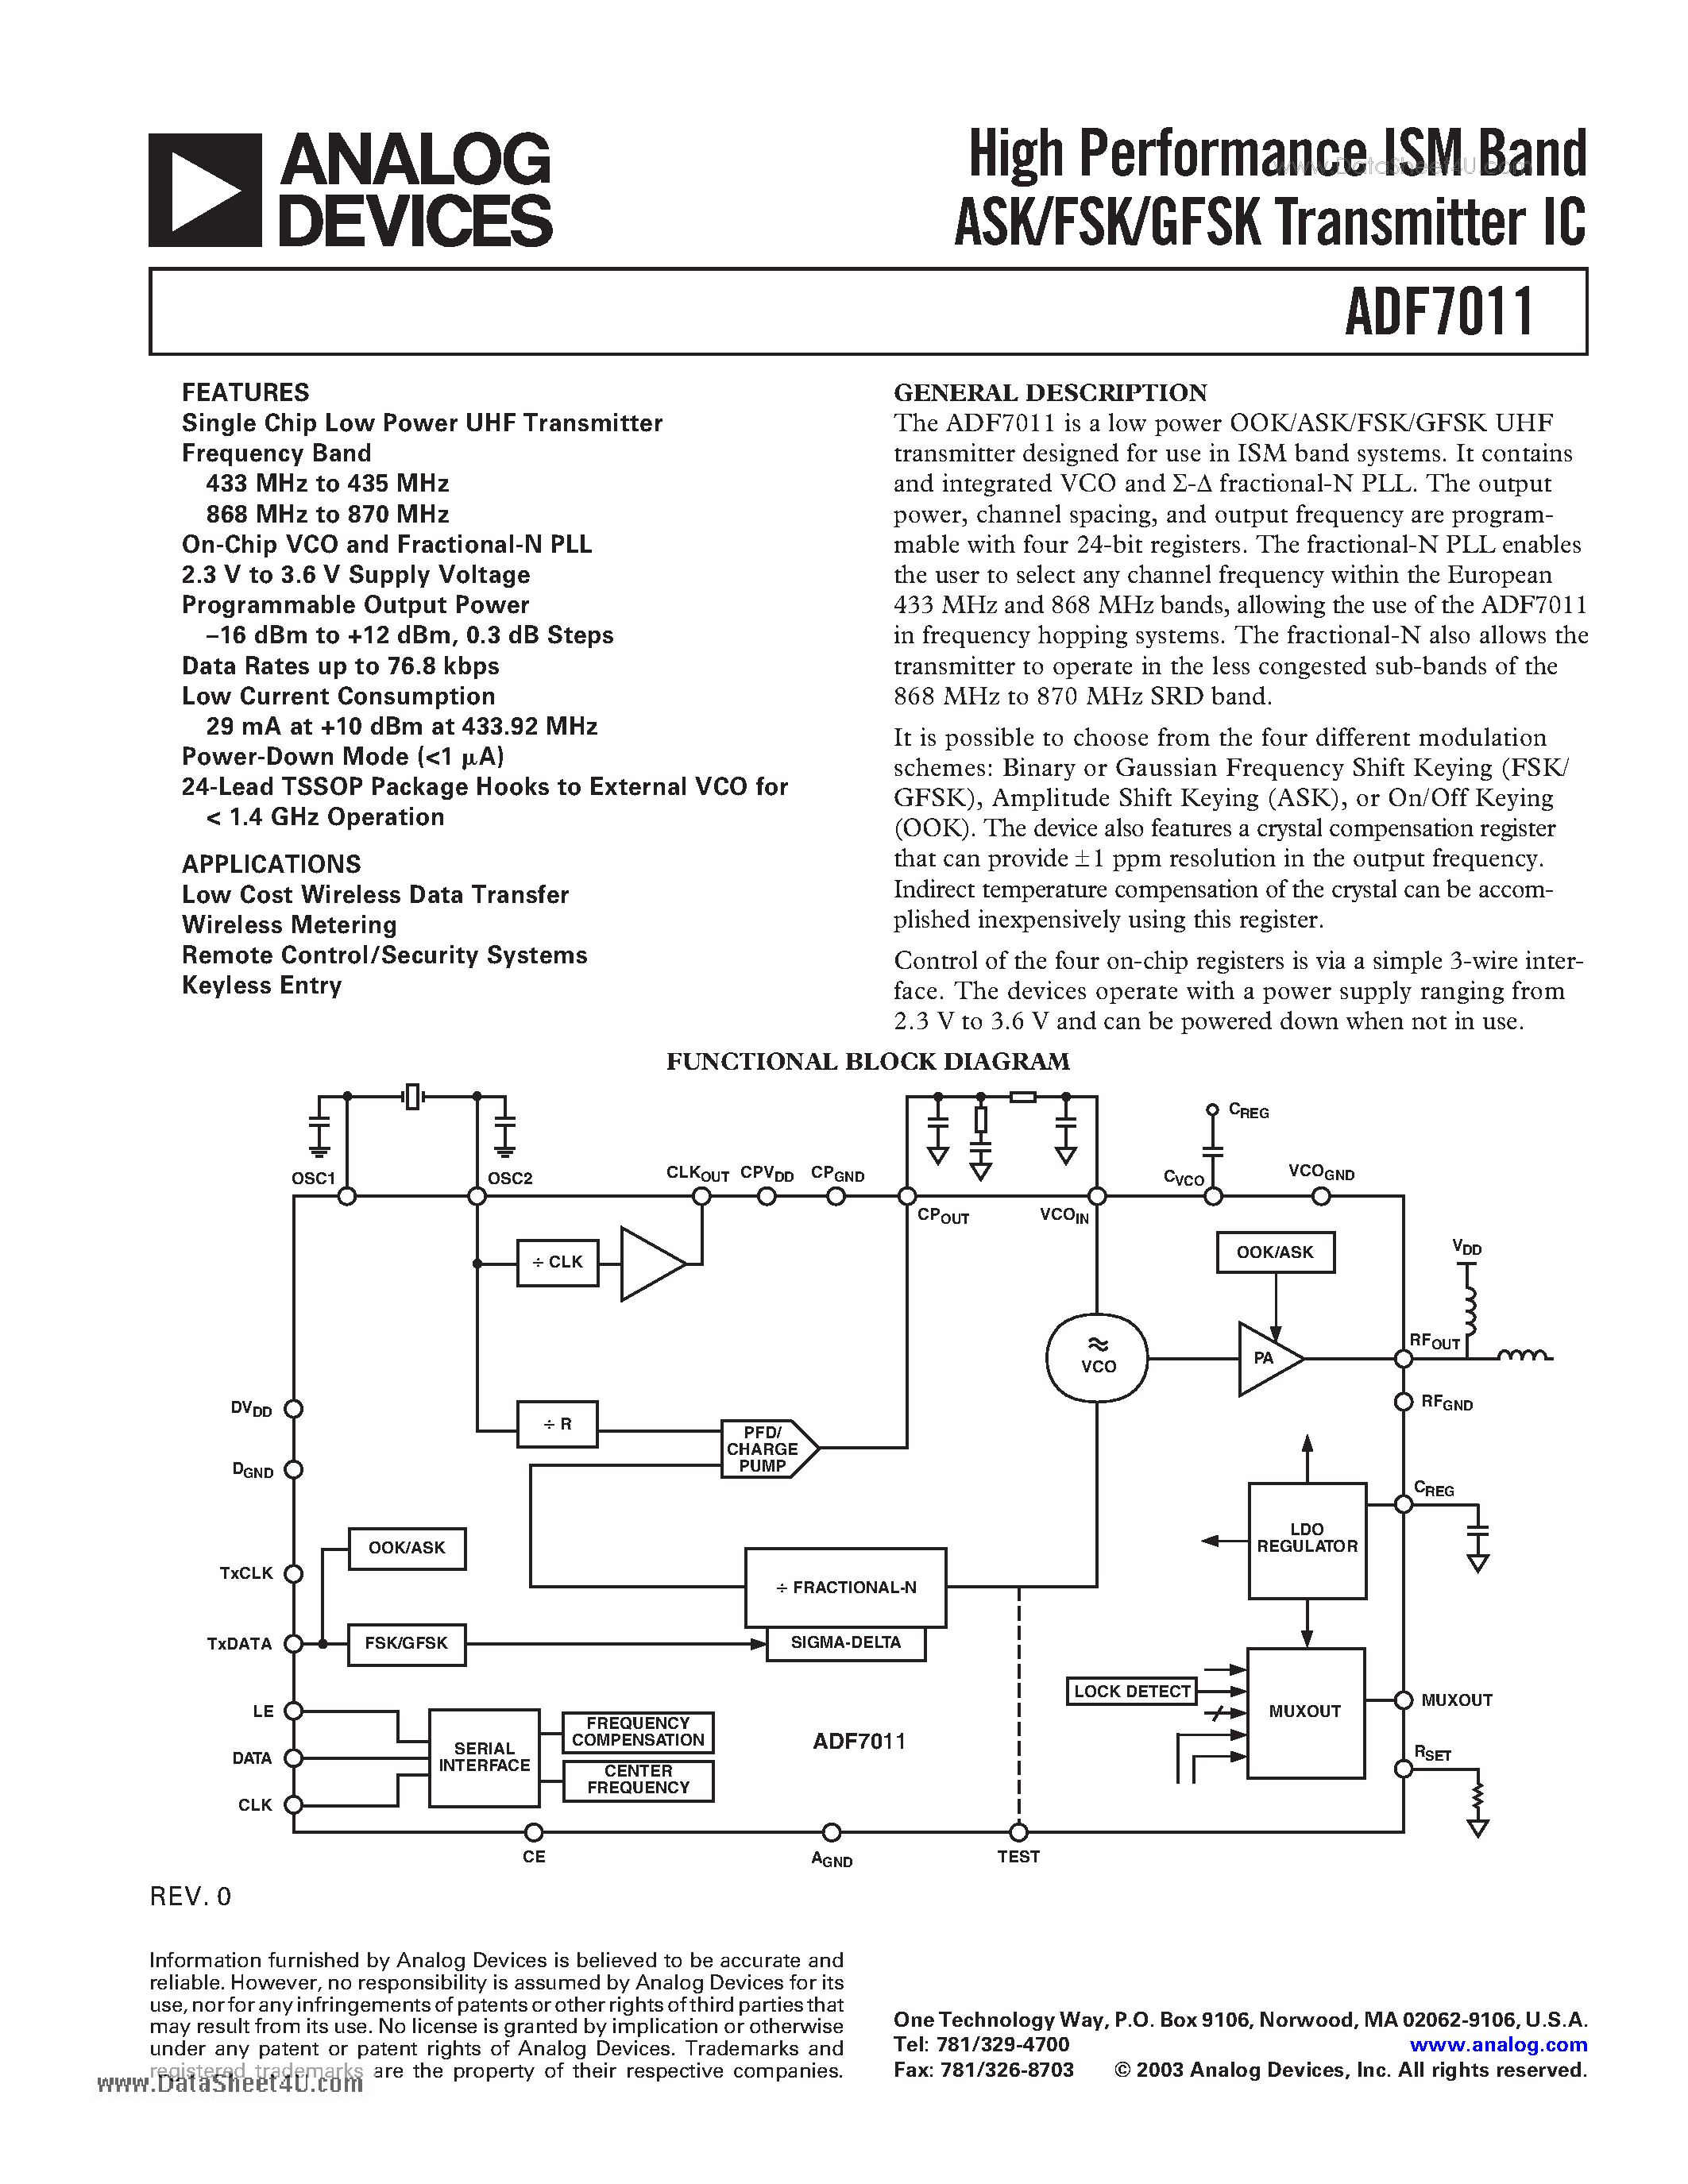 Даташит ADF7011 - High Performance ISM Band ASK/FSK/GFSK Transmitter IC страница 1